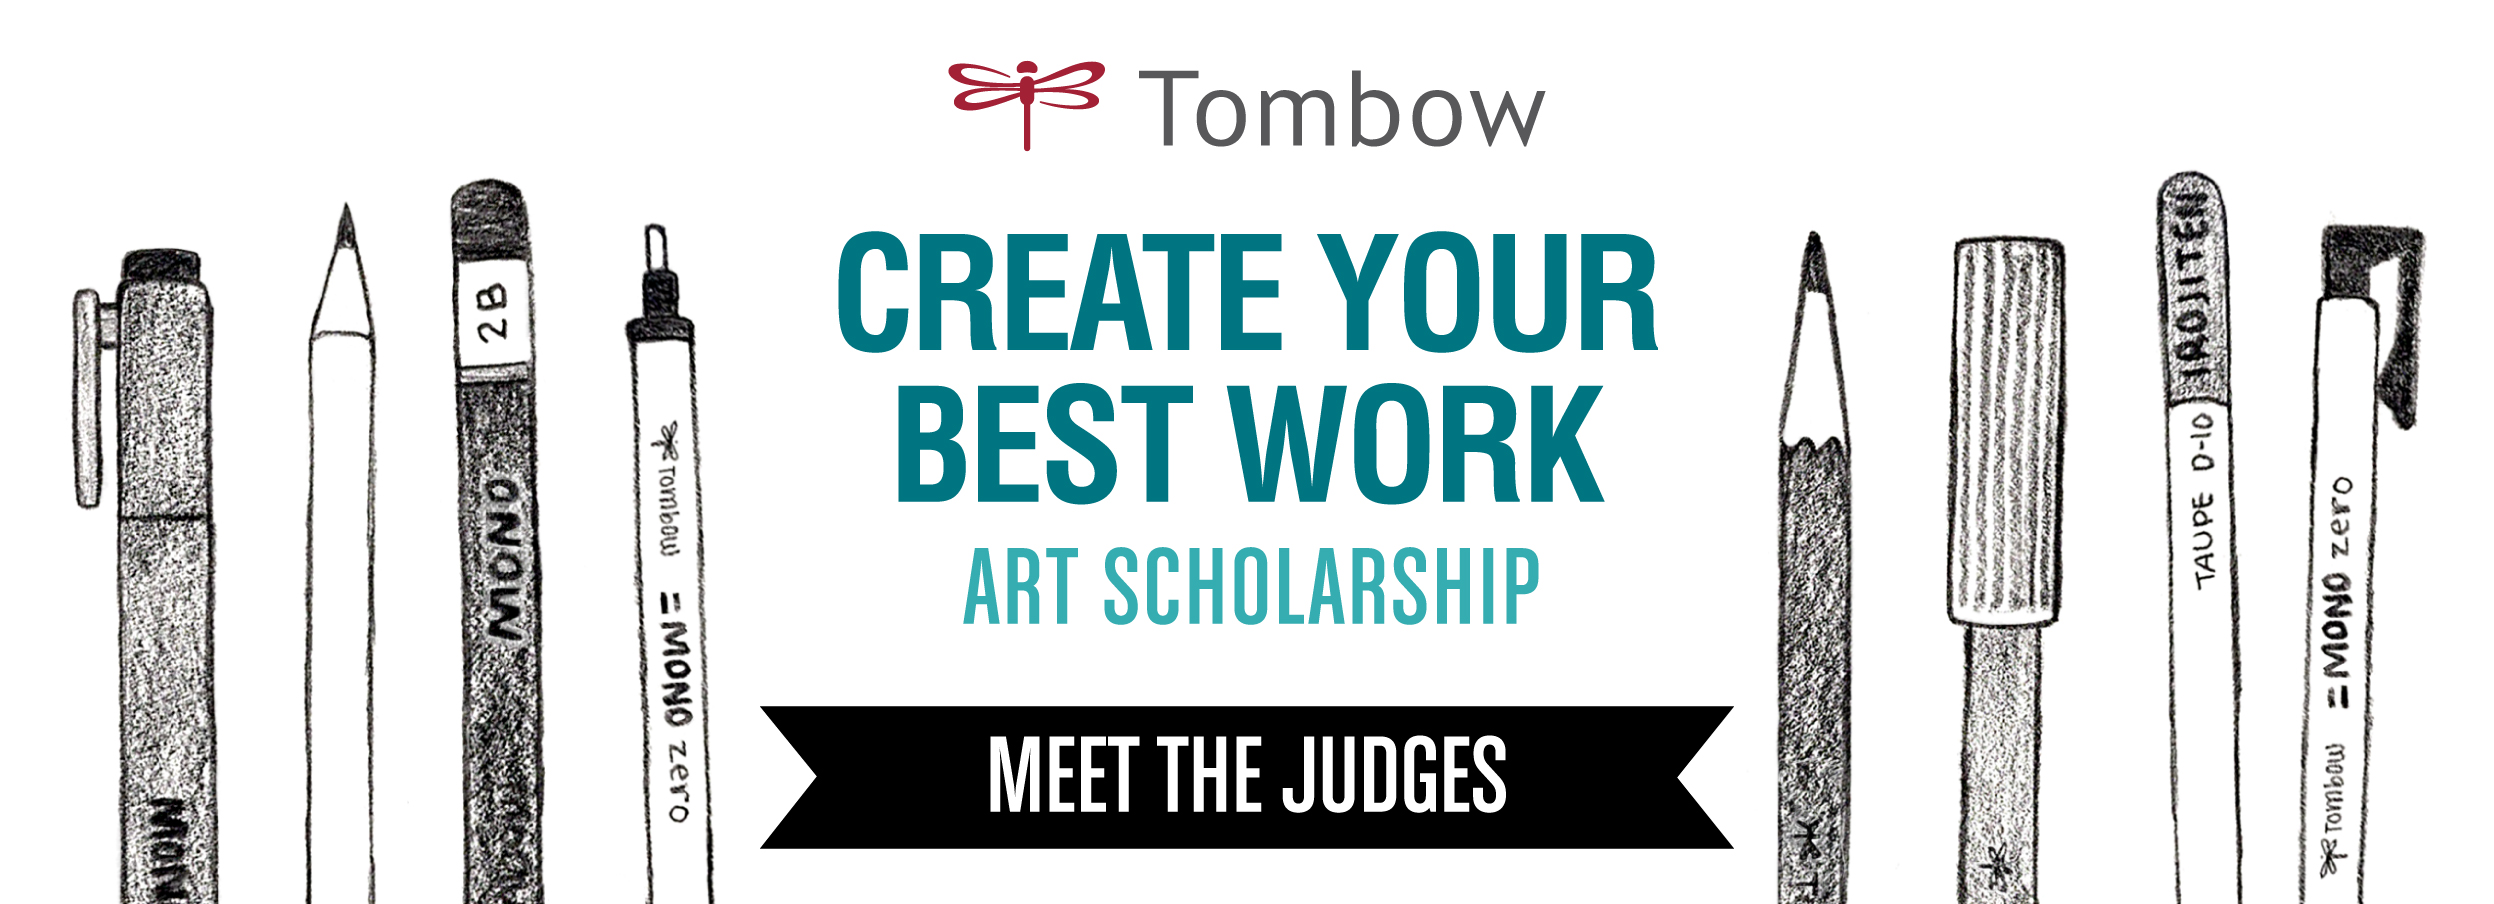 Meet the judges of Tombow's Create Your Best Work Art Scholarship